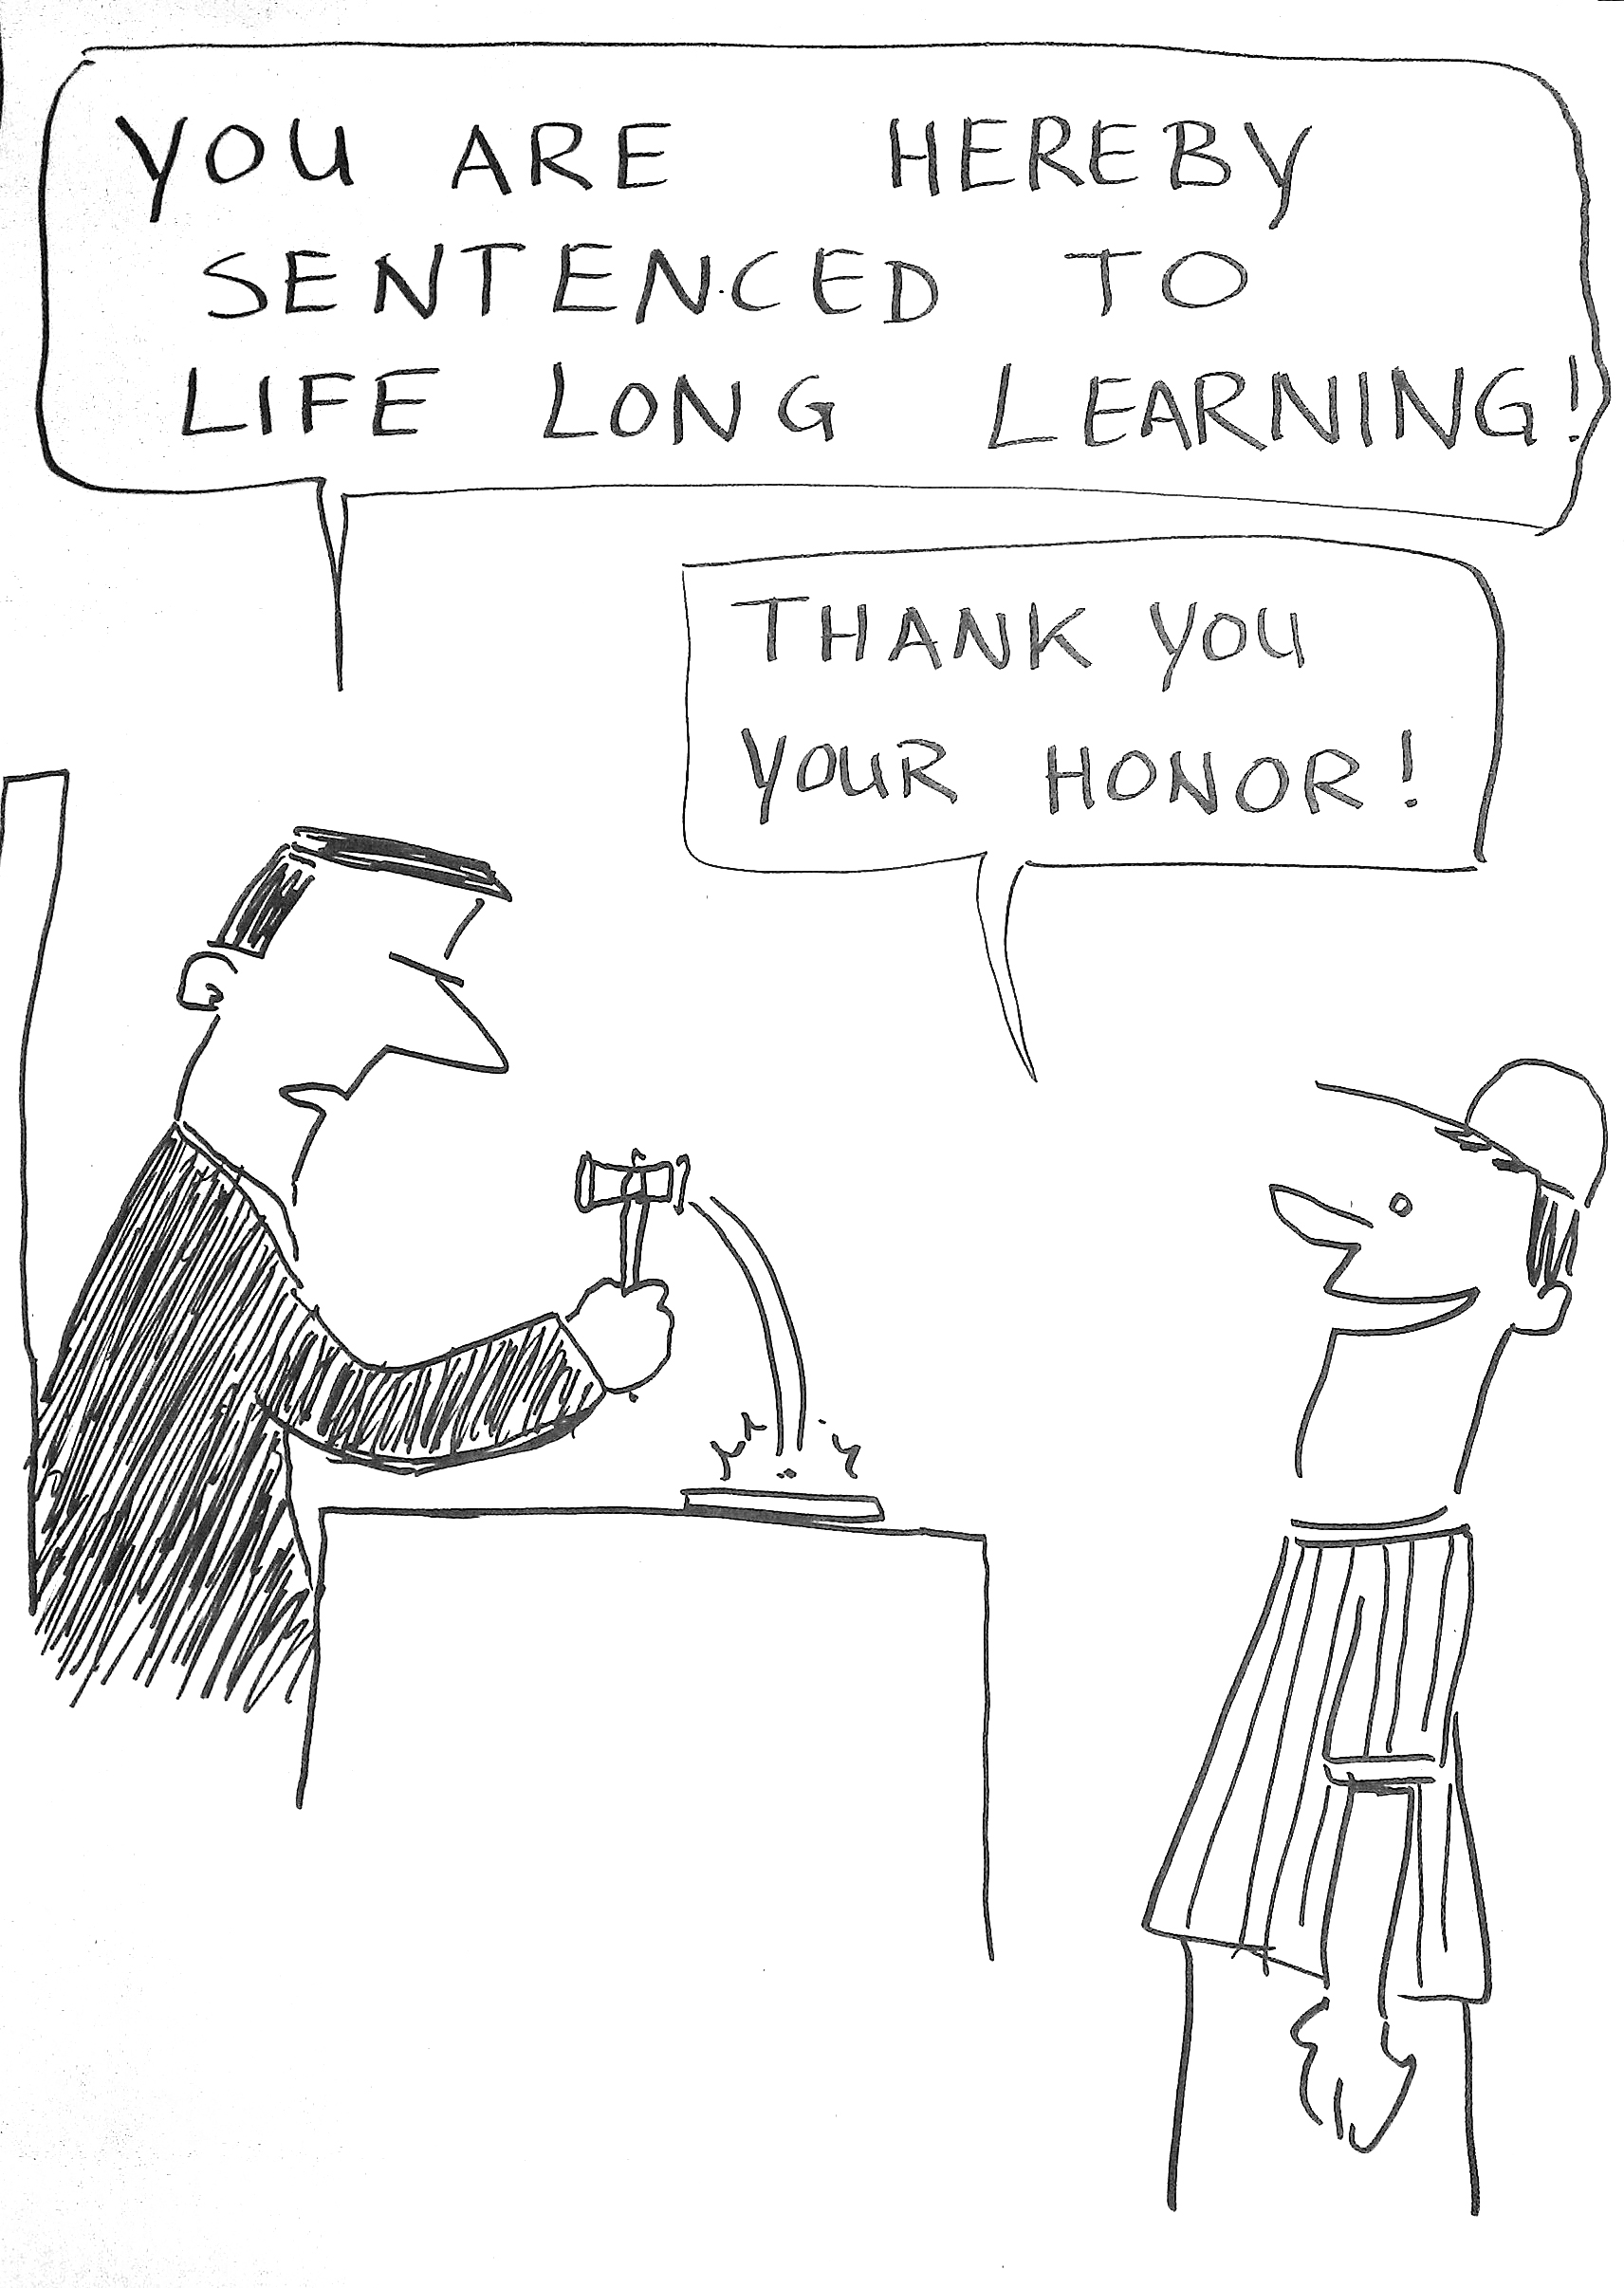 life long learning.